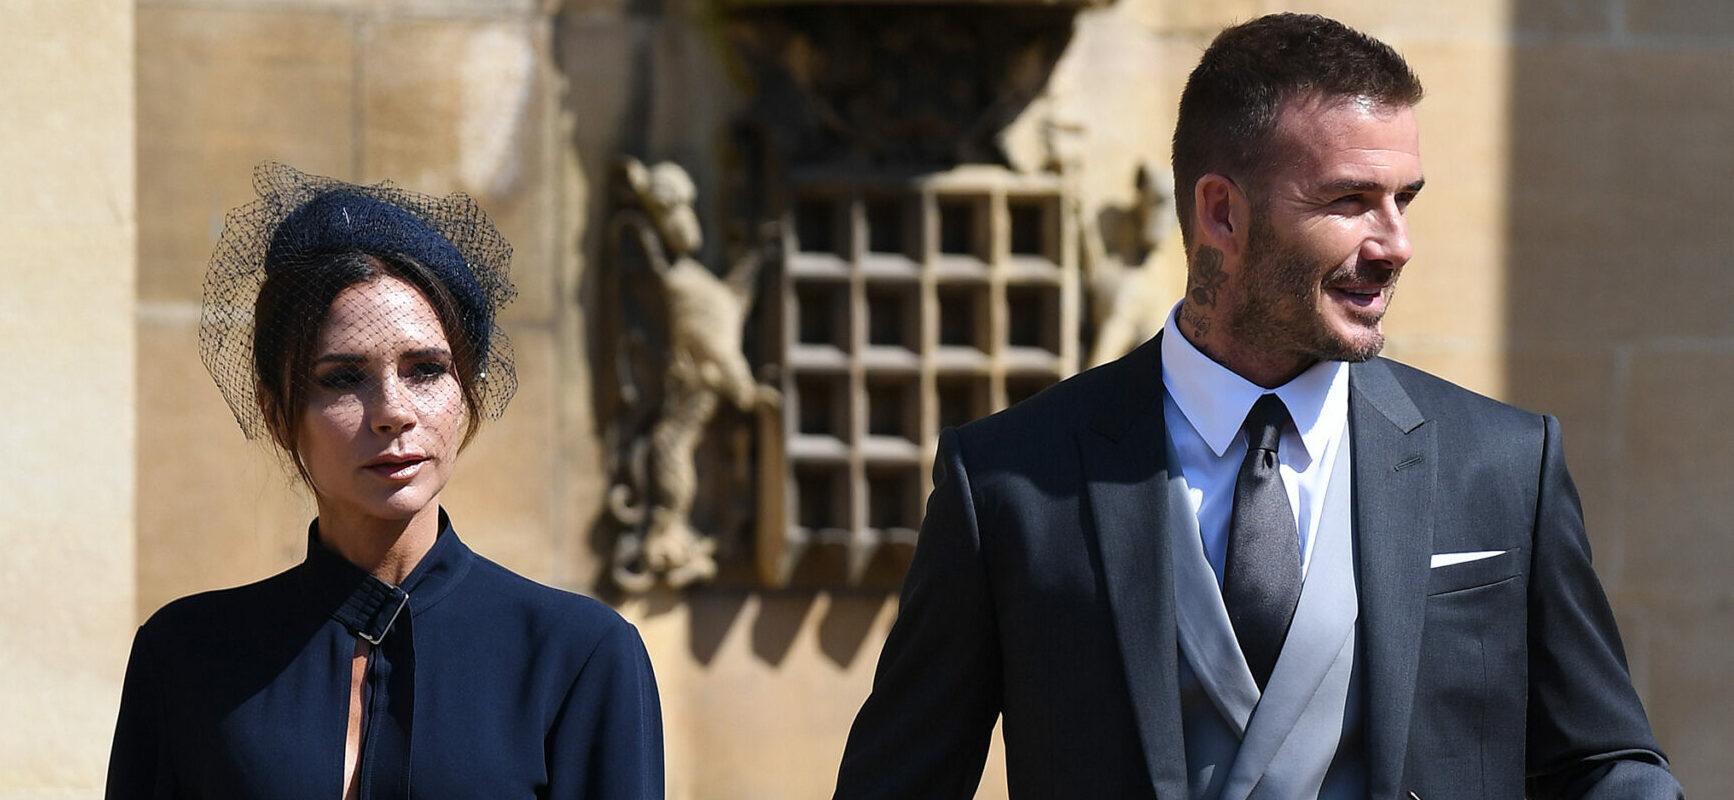 Victoria Beckham Drools Over Husband David Beckham’s ‘Tossing’ Skills On Pancake Day